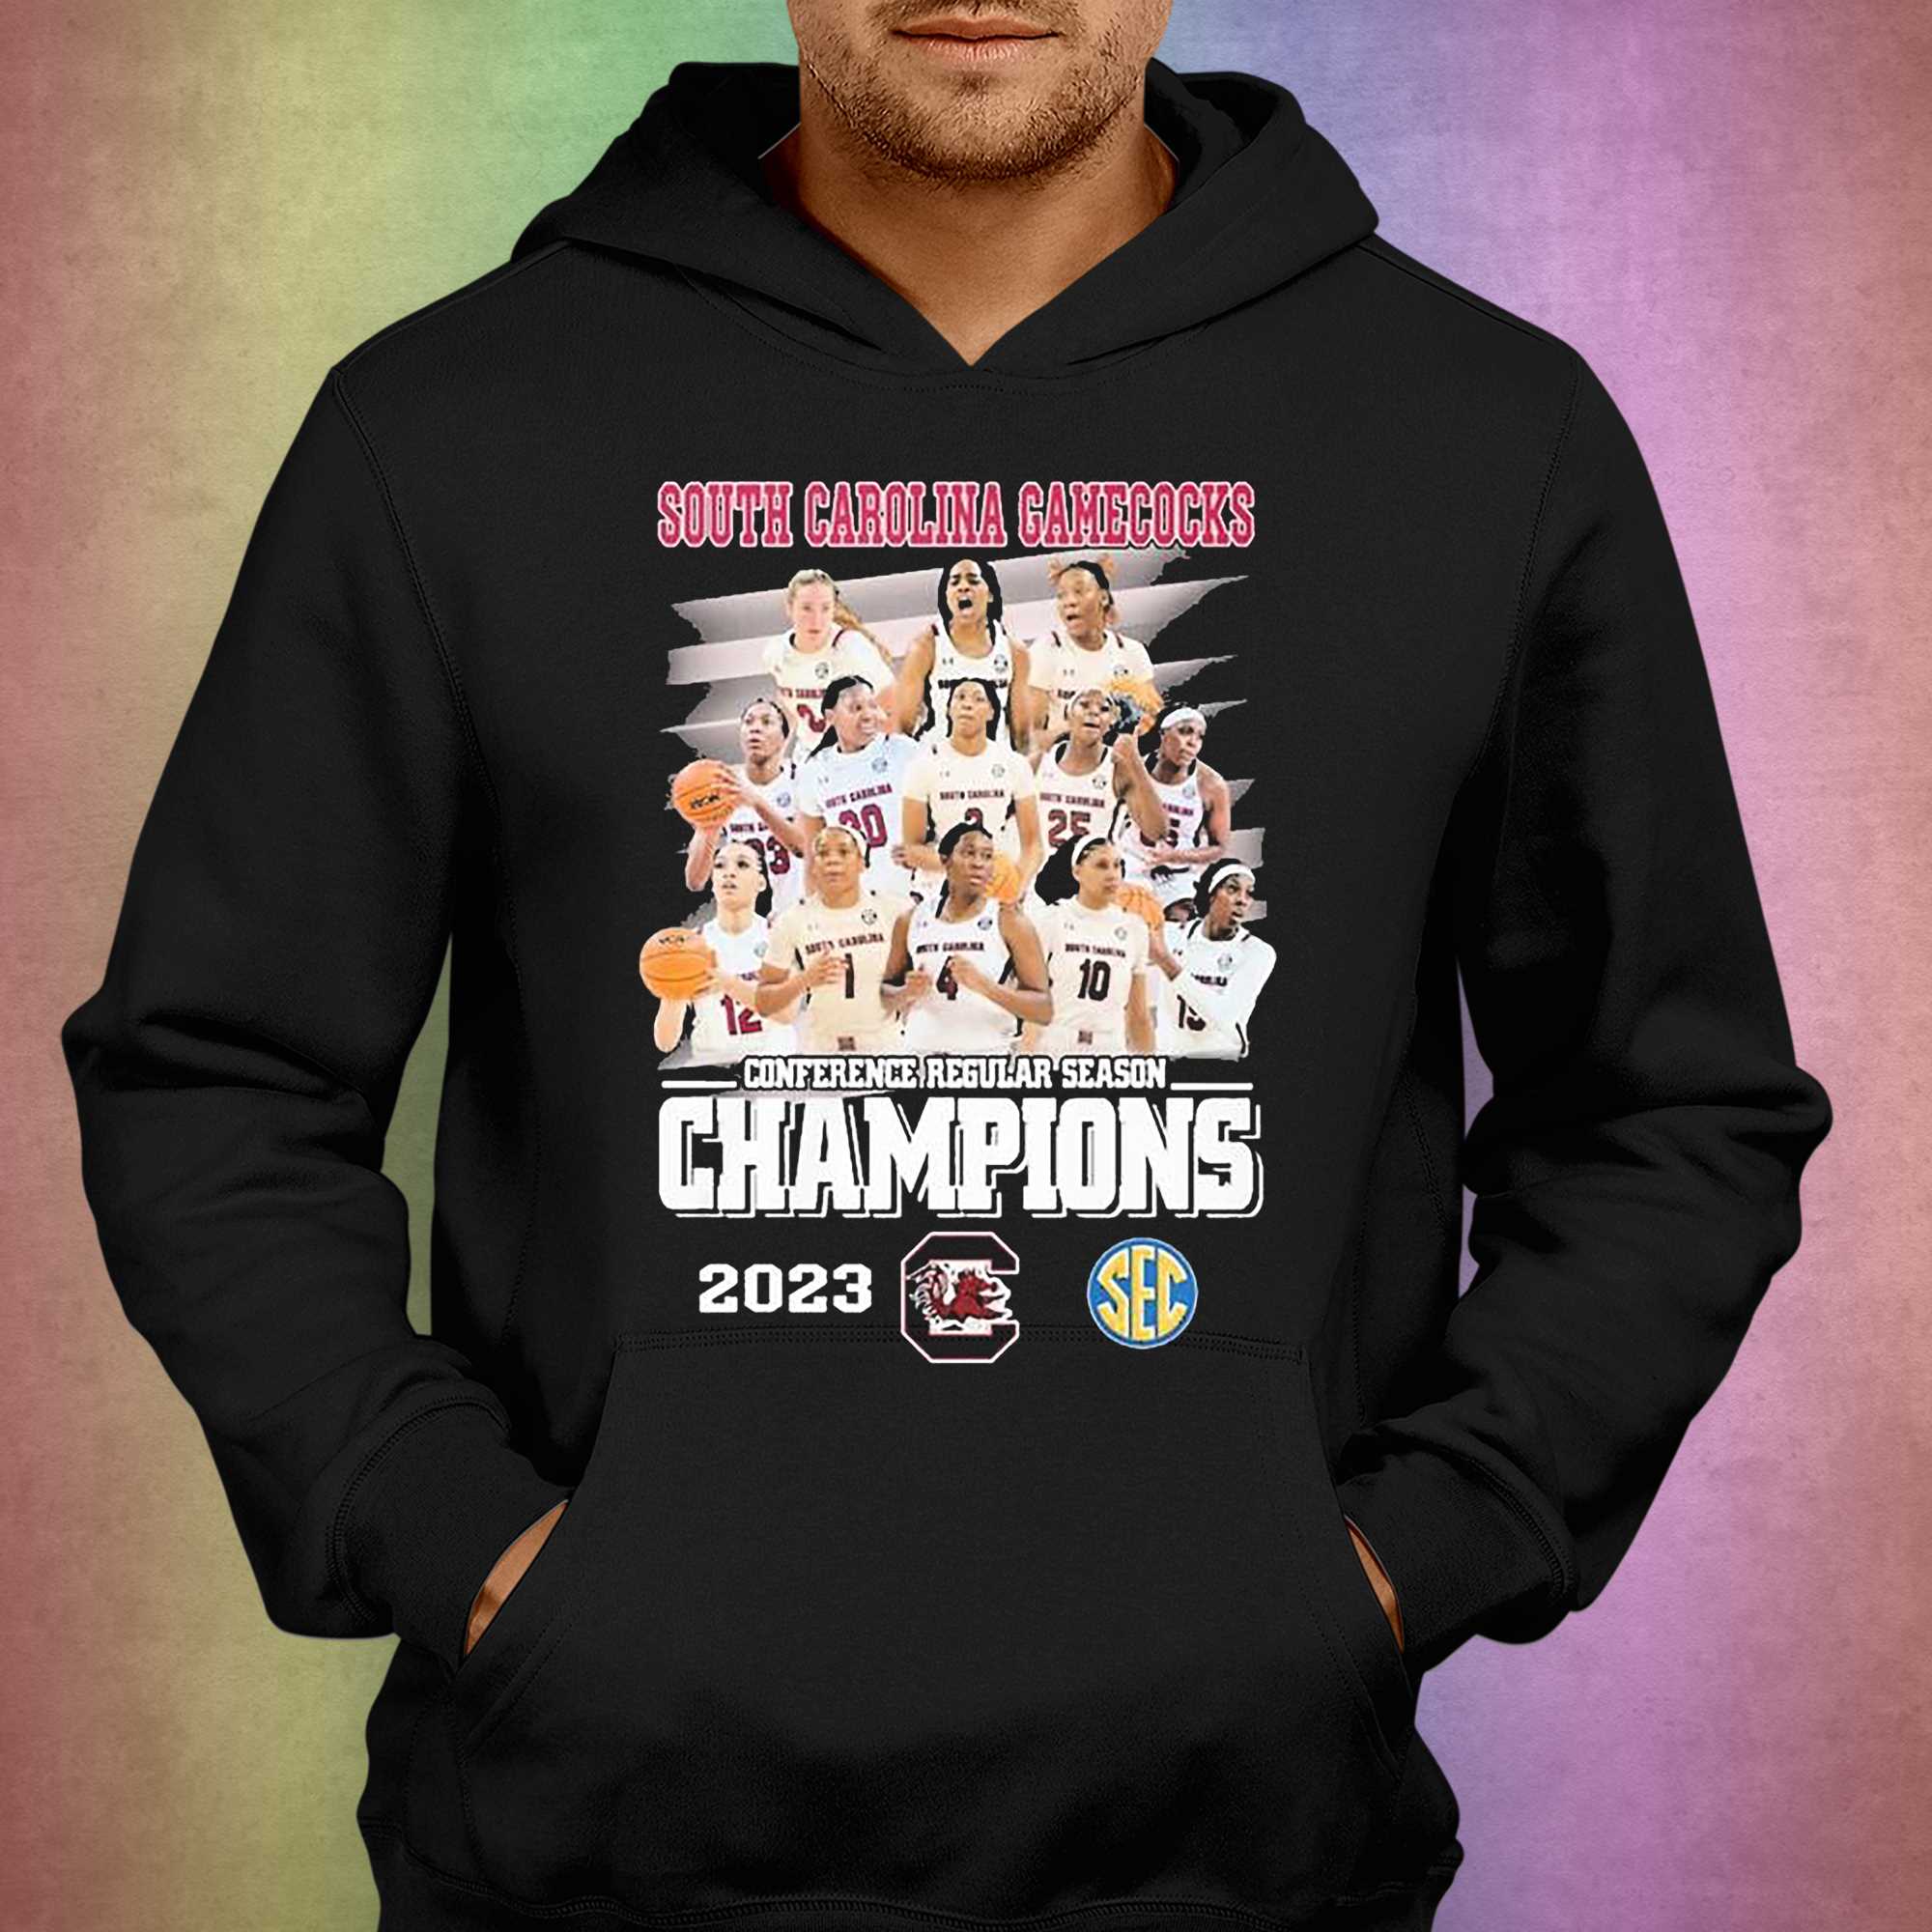 South Carolina Gamecocks Womens Basketball Team Conference Regular Season Champions 2023 T-shirt 